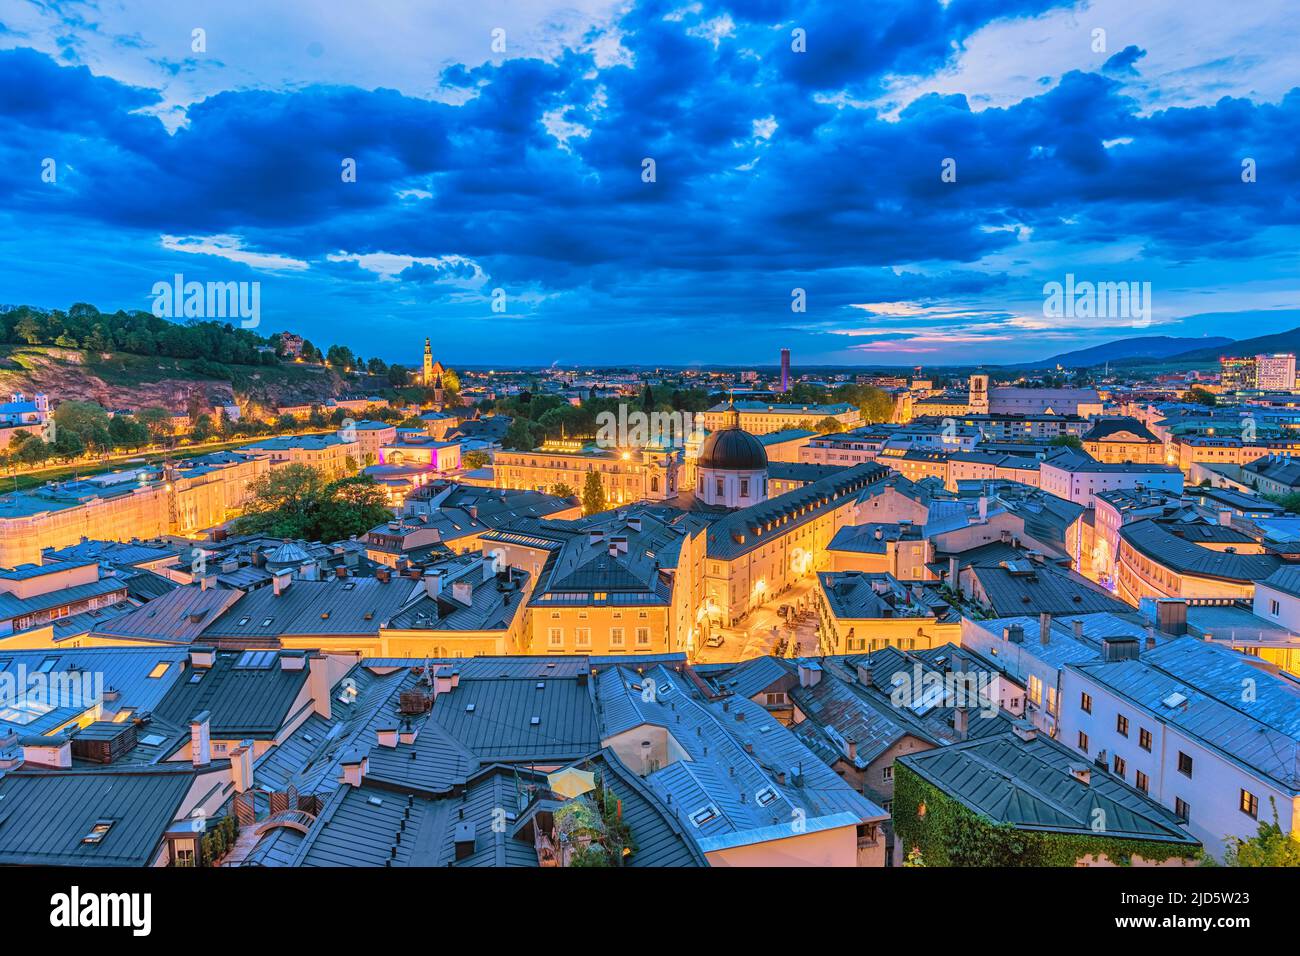 Salzburg Austria, night city skyline of Salzburg city center Stock Photo